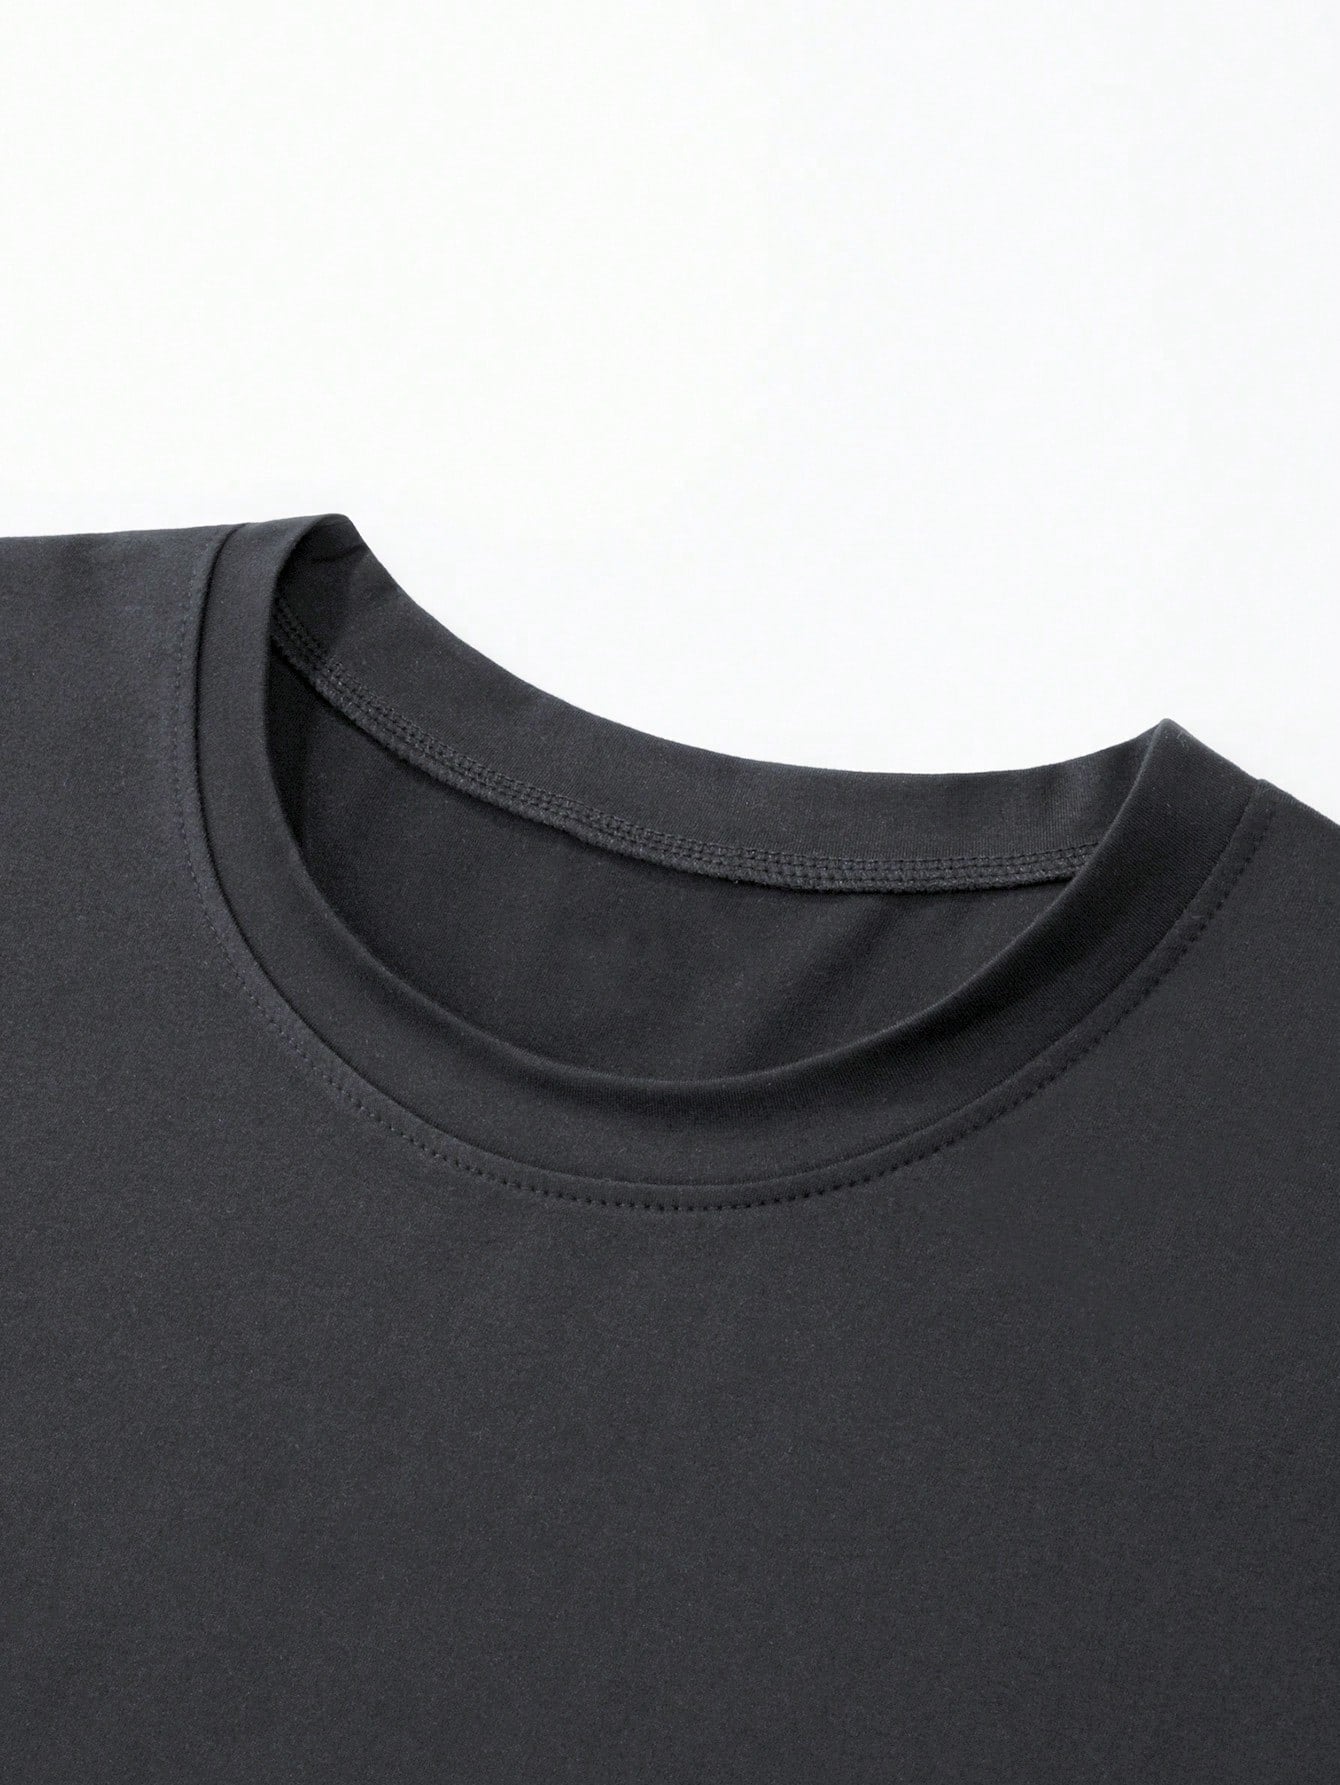 Men's Casual Seagull Print Crew Neck T-Shirt, Short Sleeve, Stretch Fabric